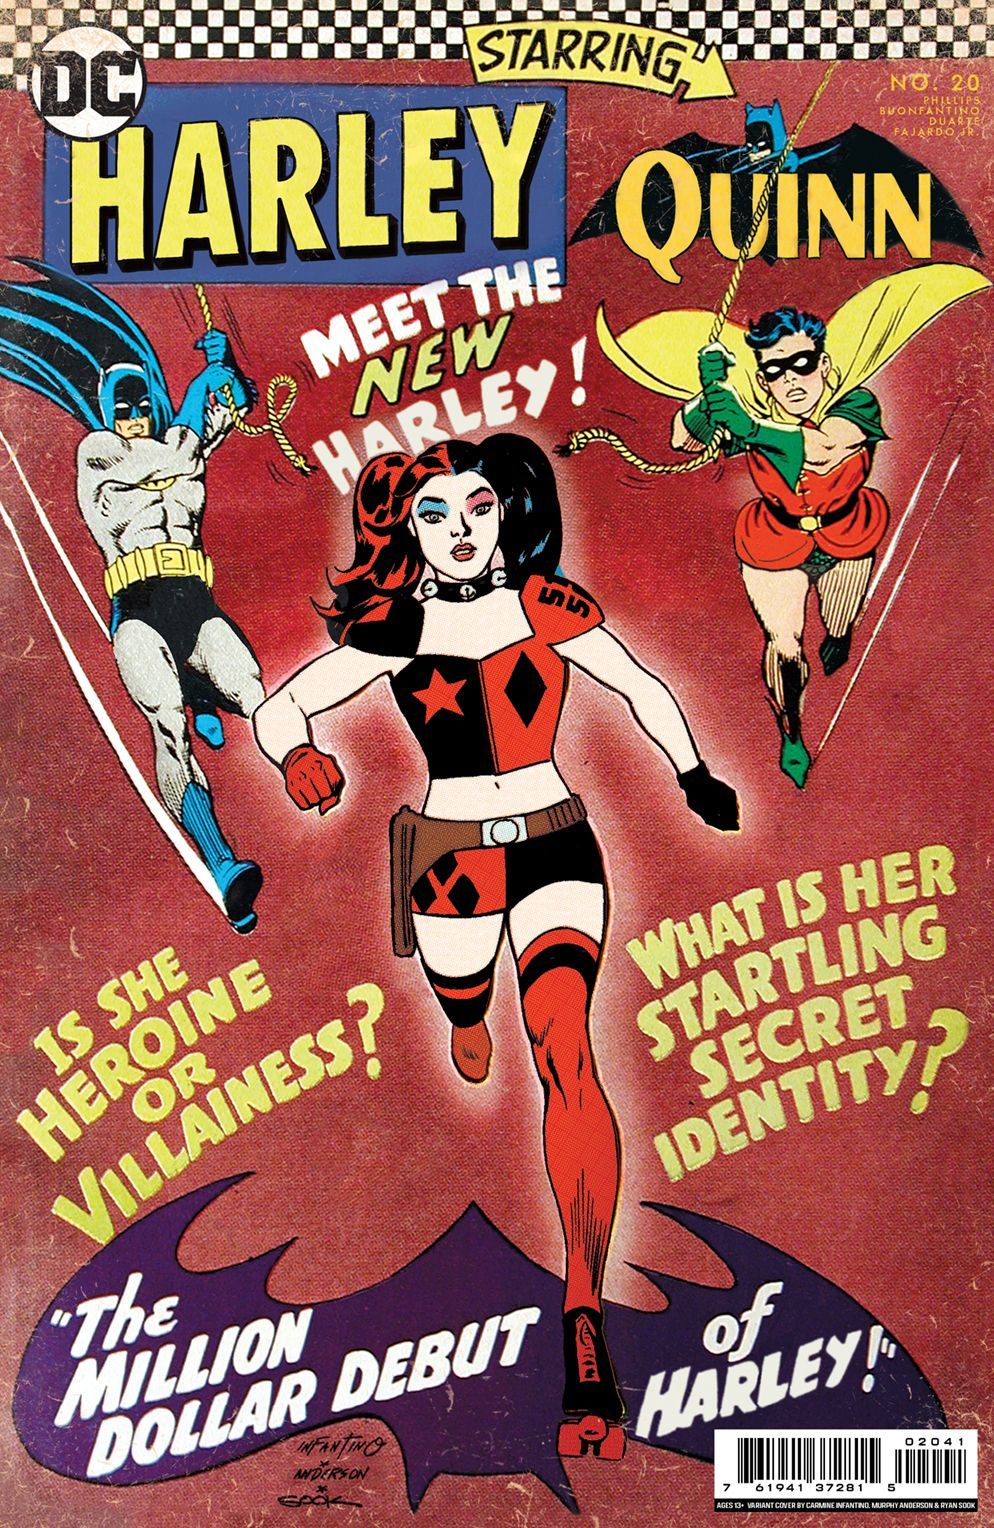 Harley Quinn #20 cover